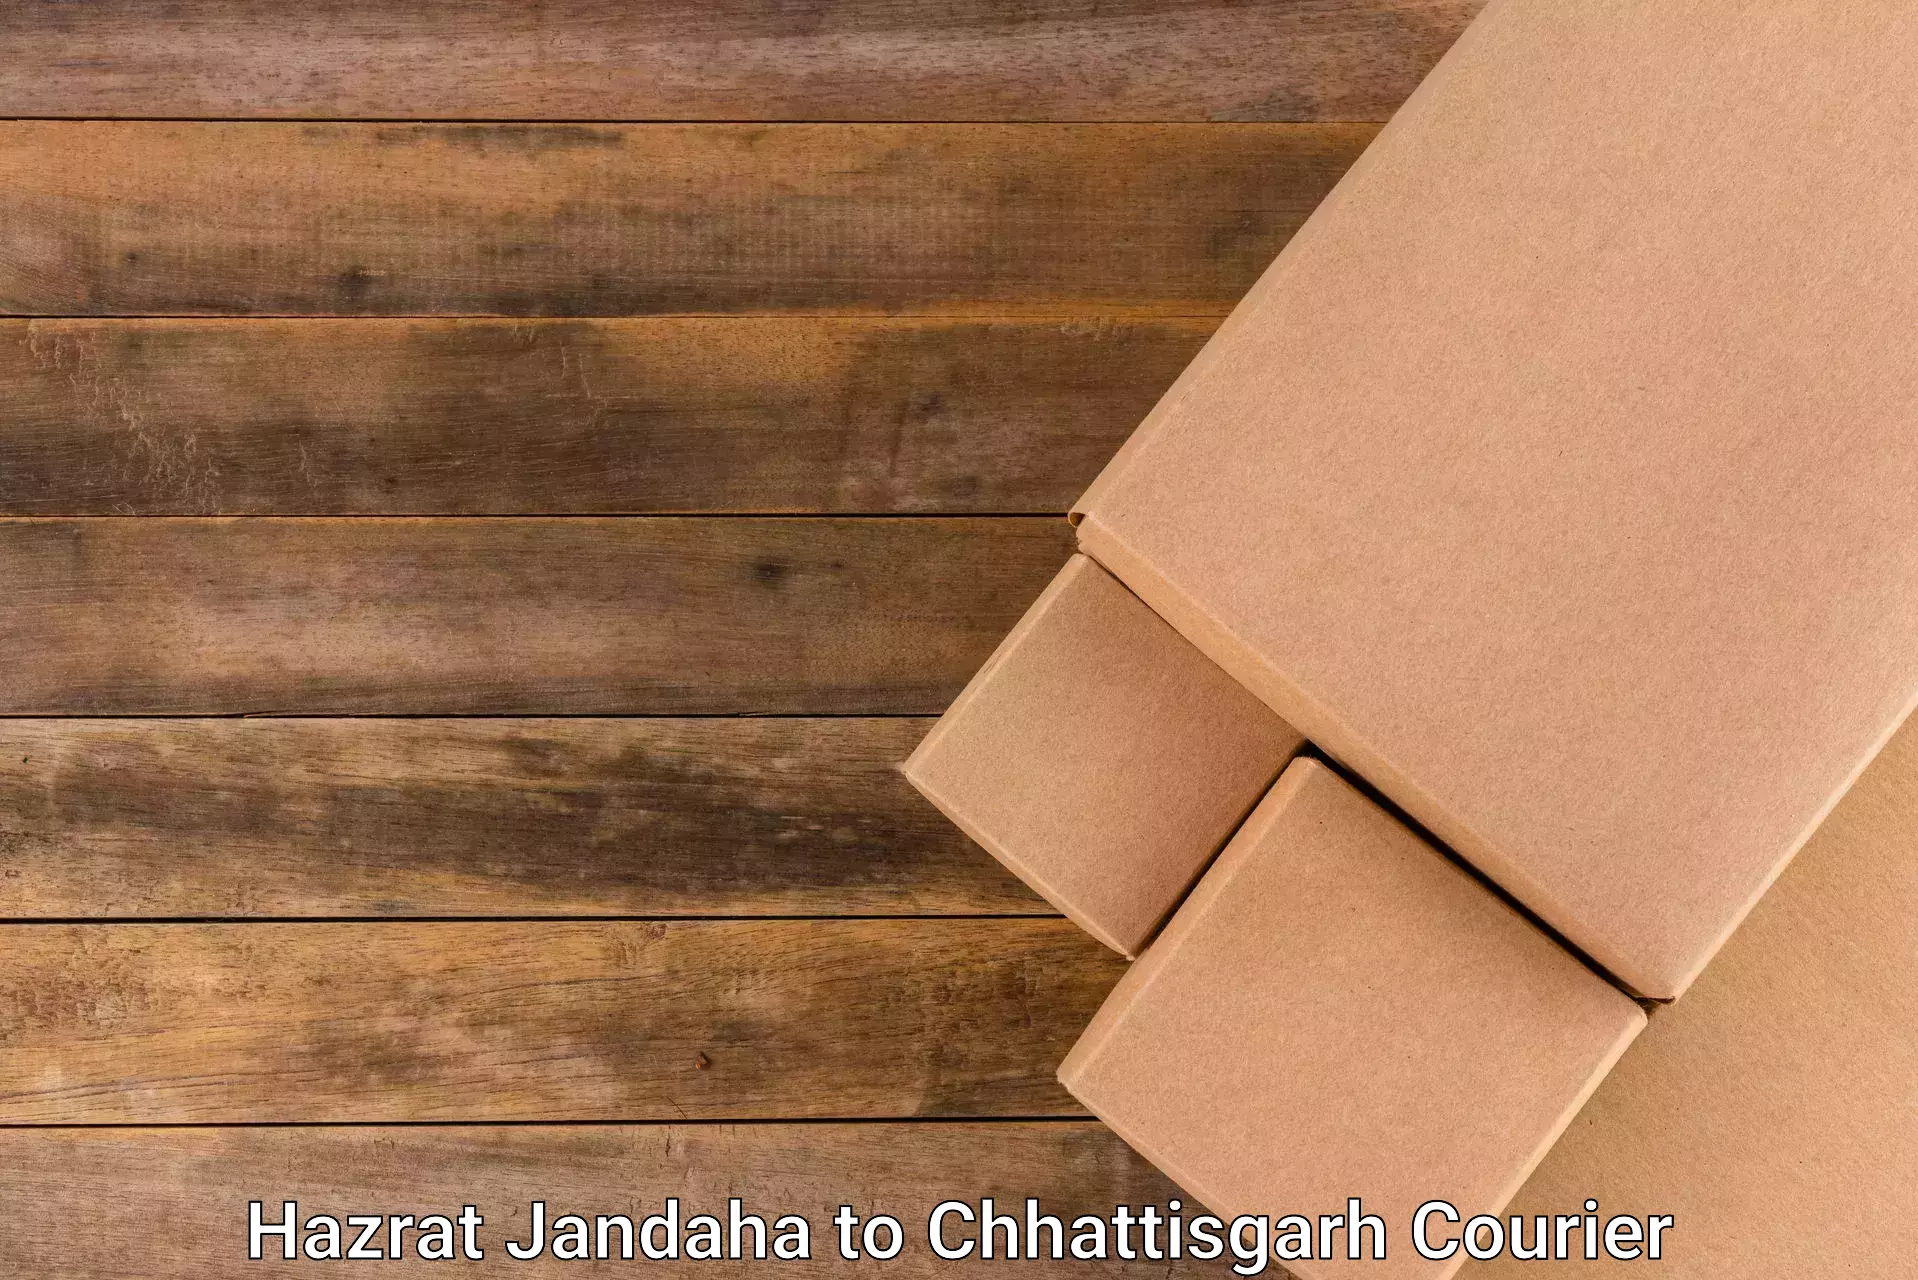 Parcel handling and care Hazrat Jandaha to Chhattisgarh